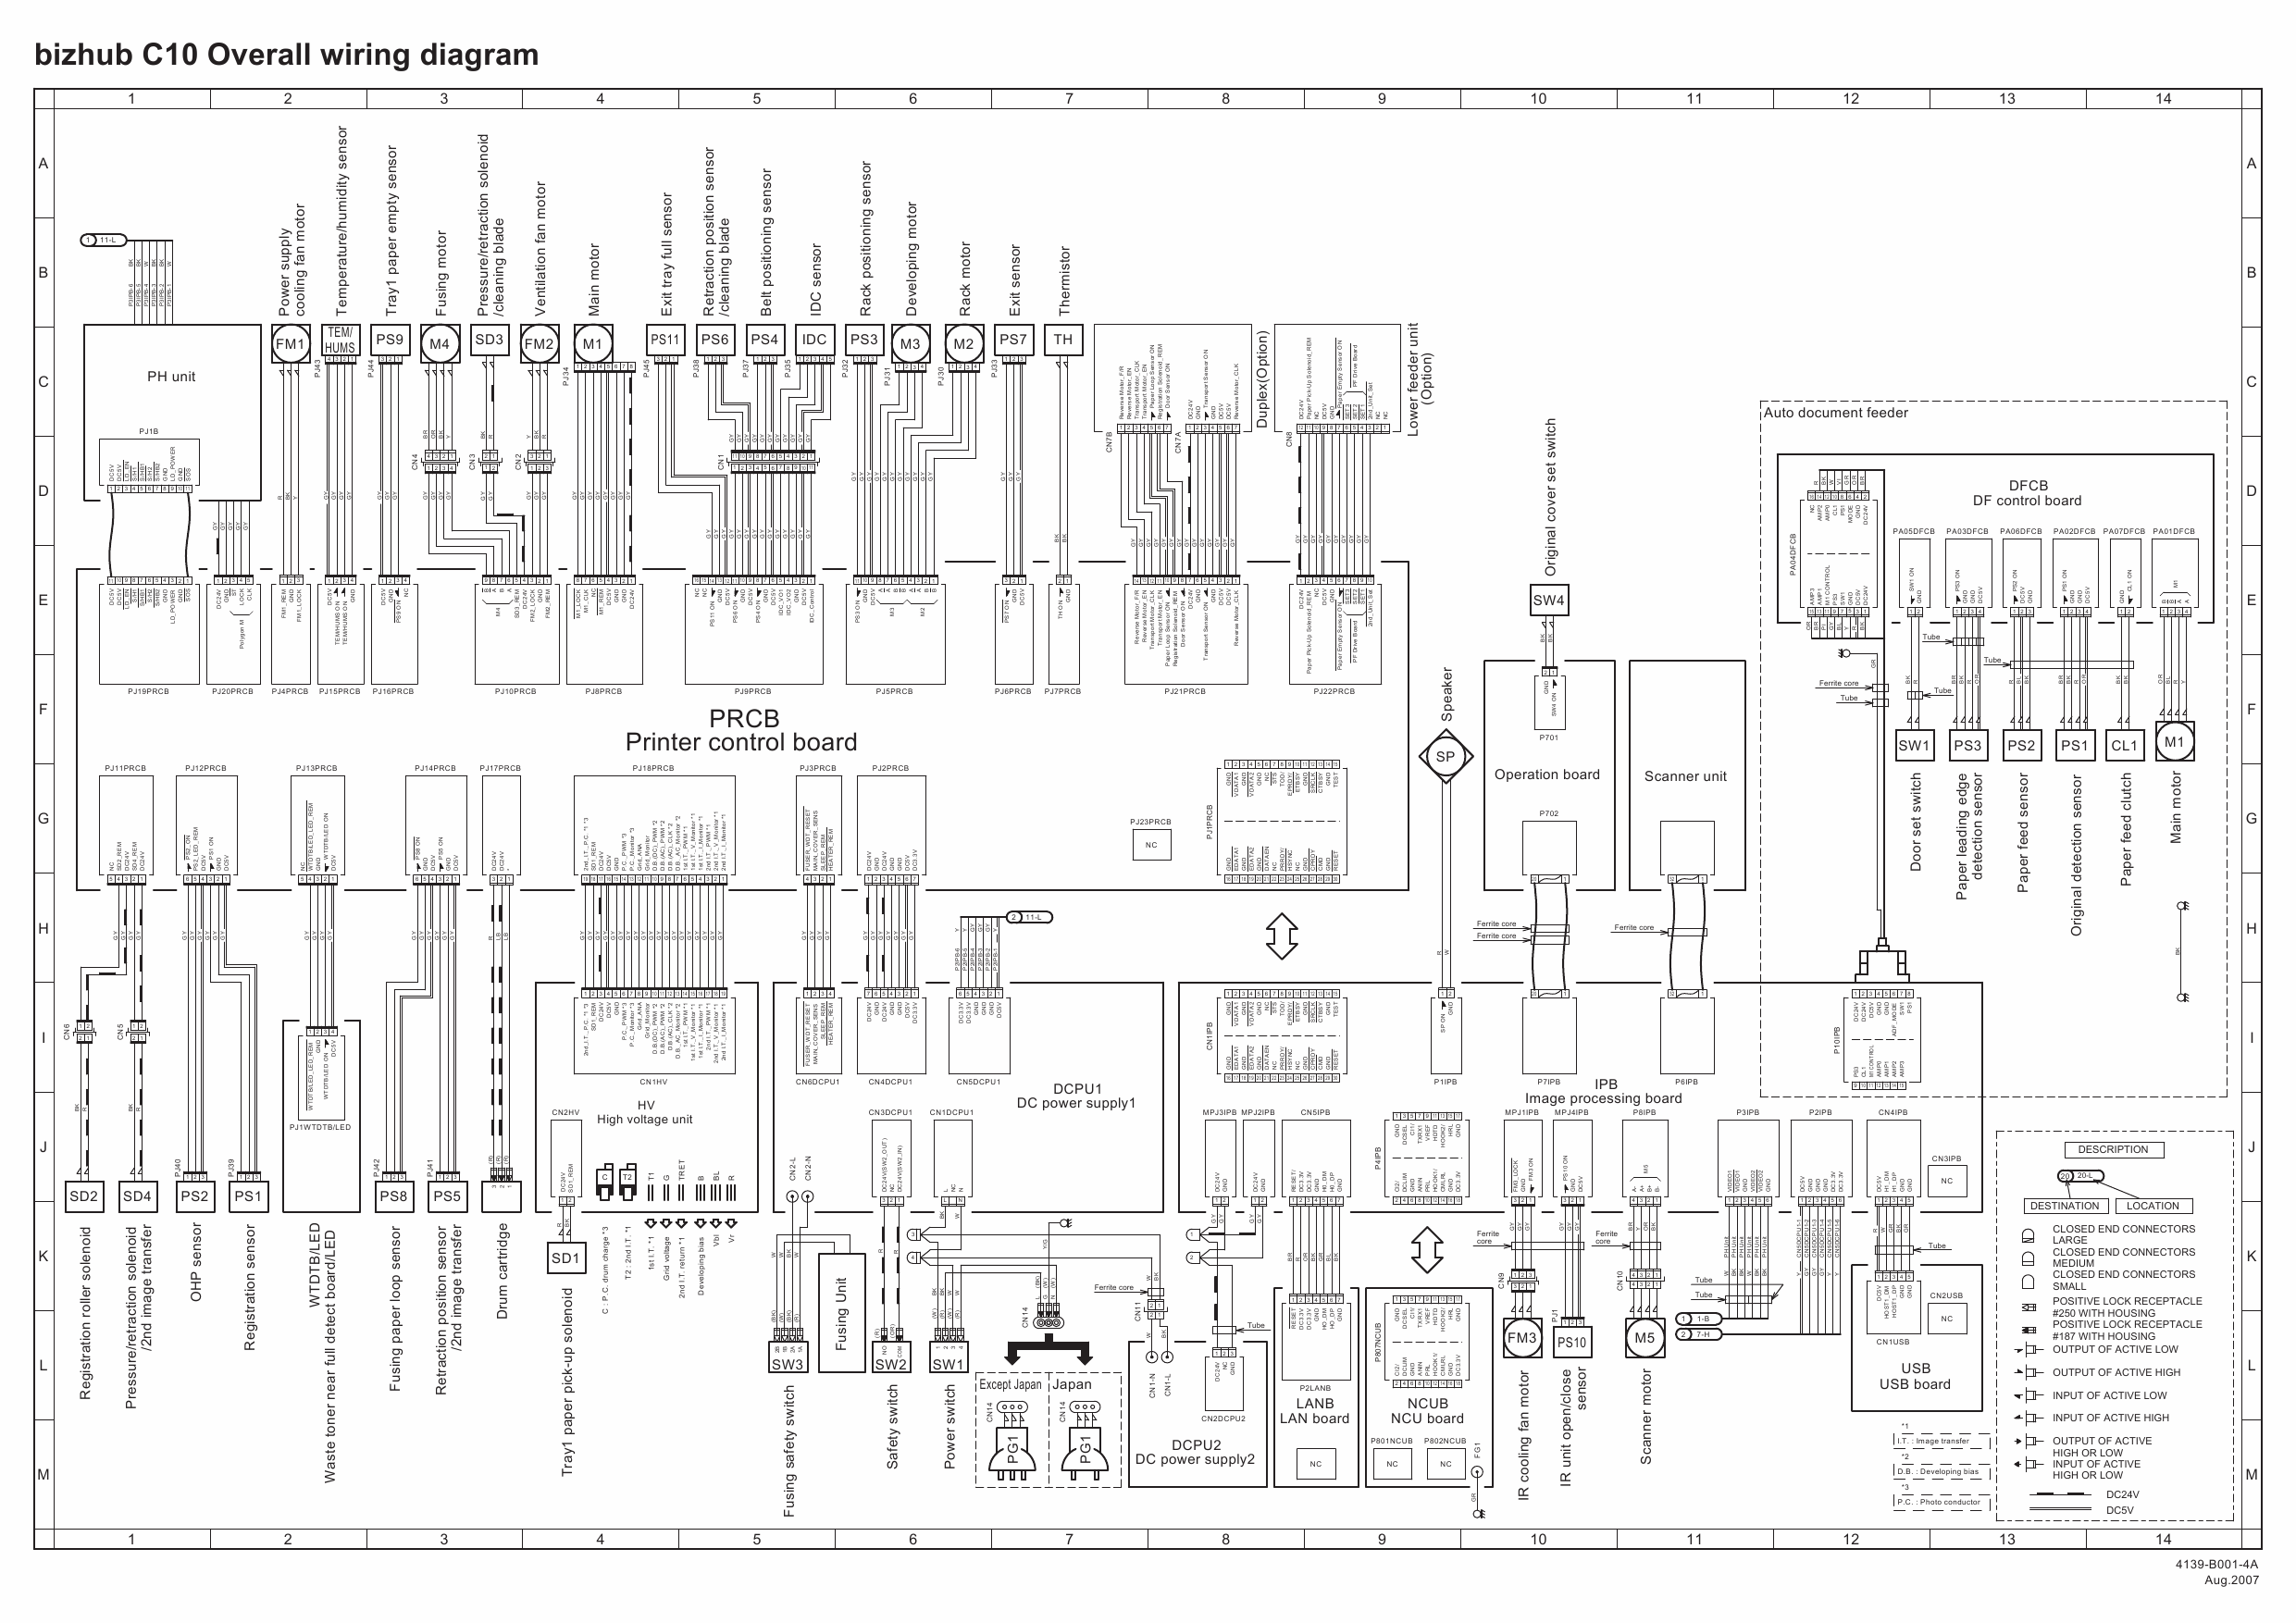 Konica-Minolta bizhub C10 Wiring Diagram-1